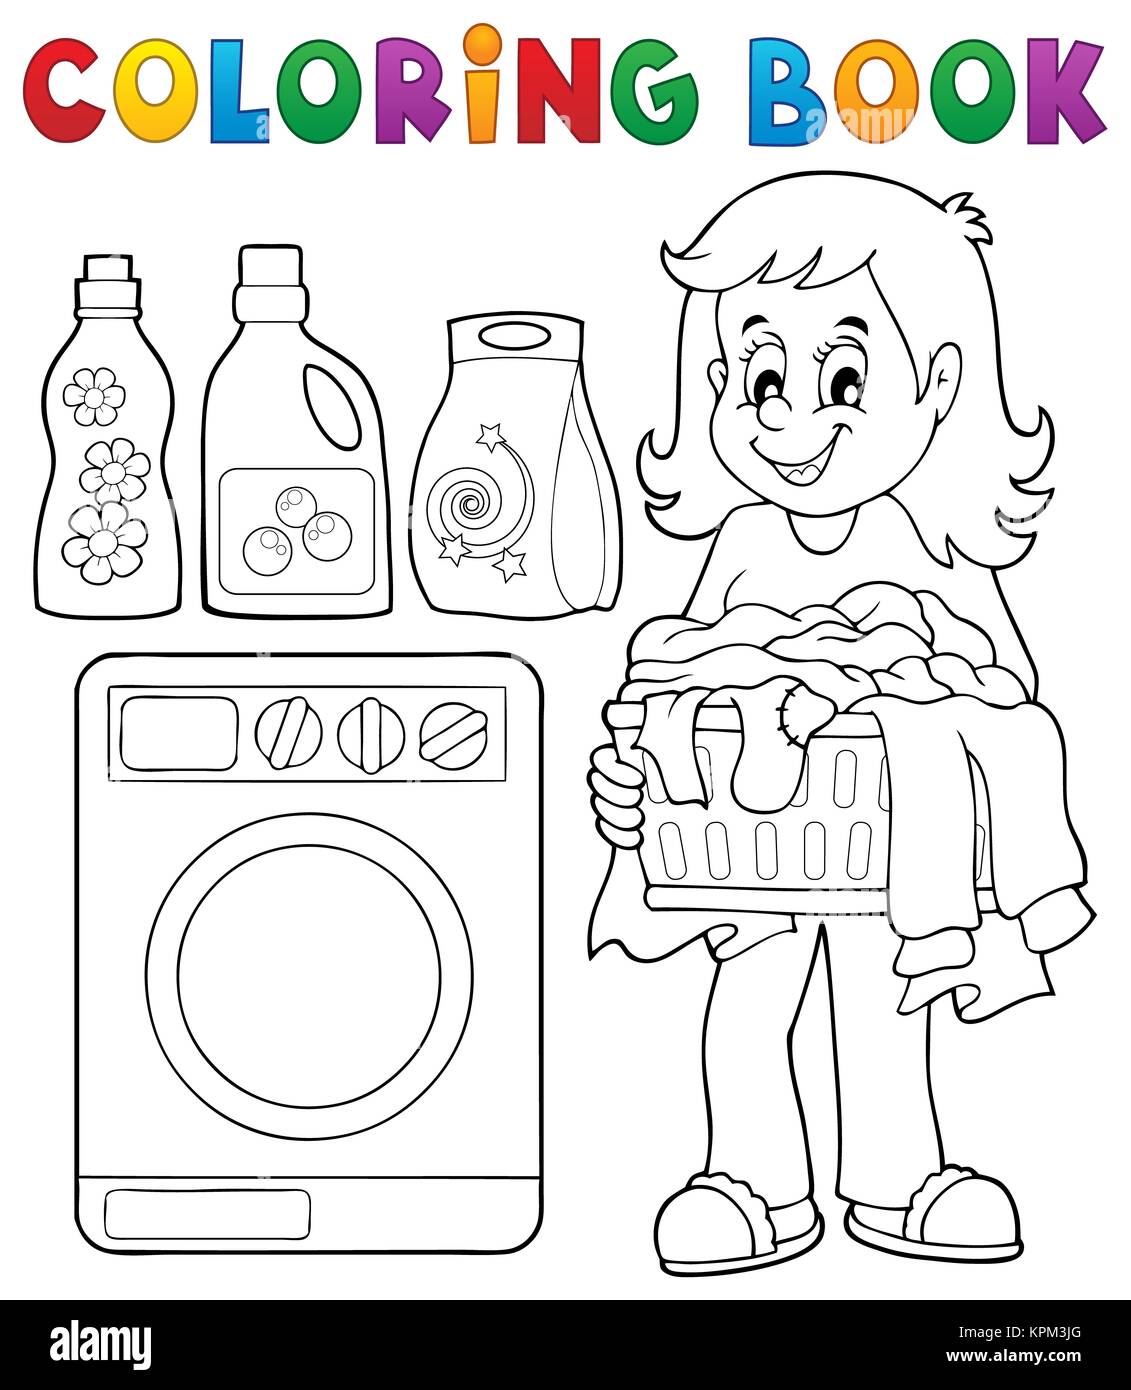 https://c8.alamy.com/comp/KPM3JG/coloring-book-laundry-theme-1-KPM3JG.jpg